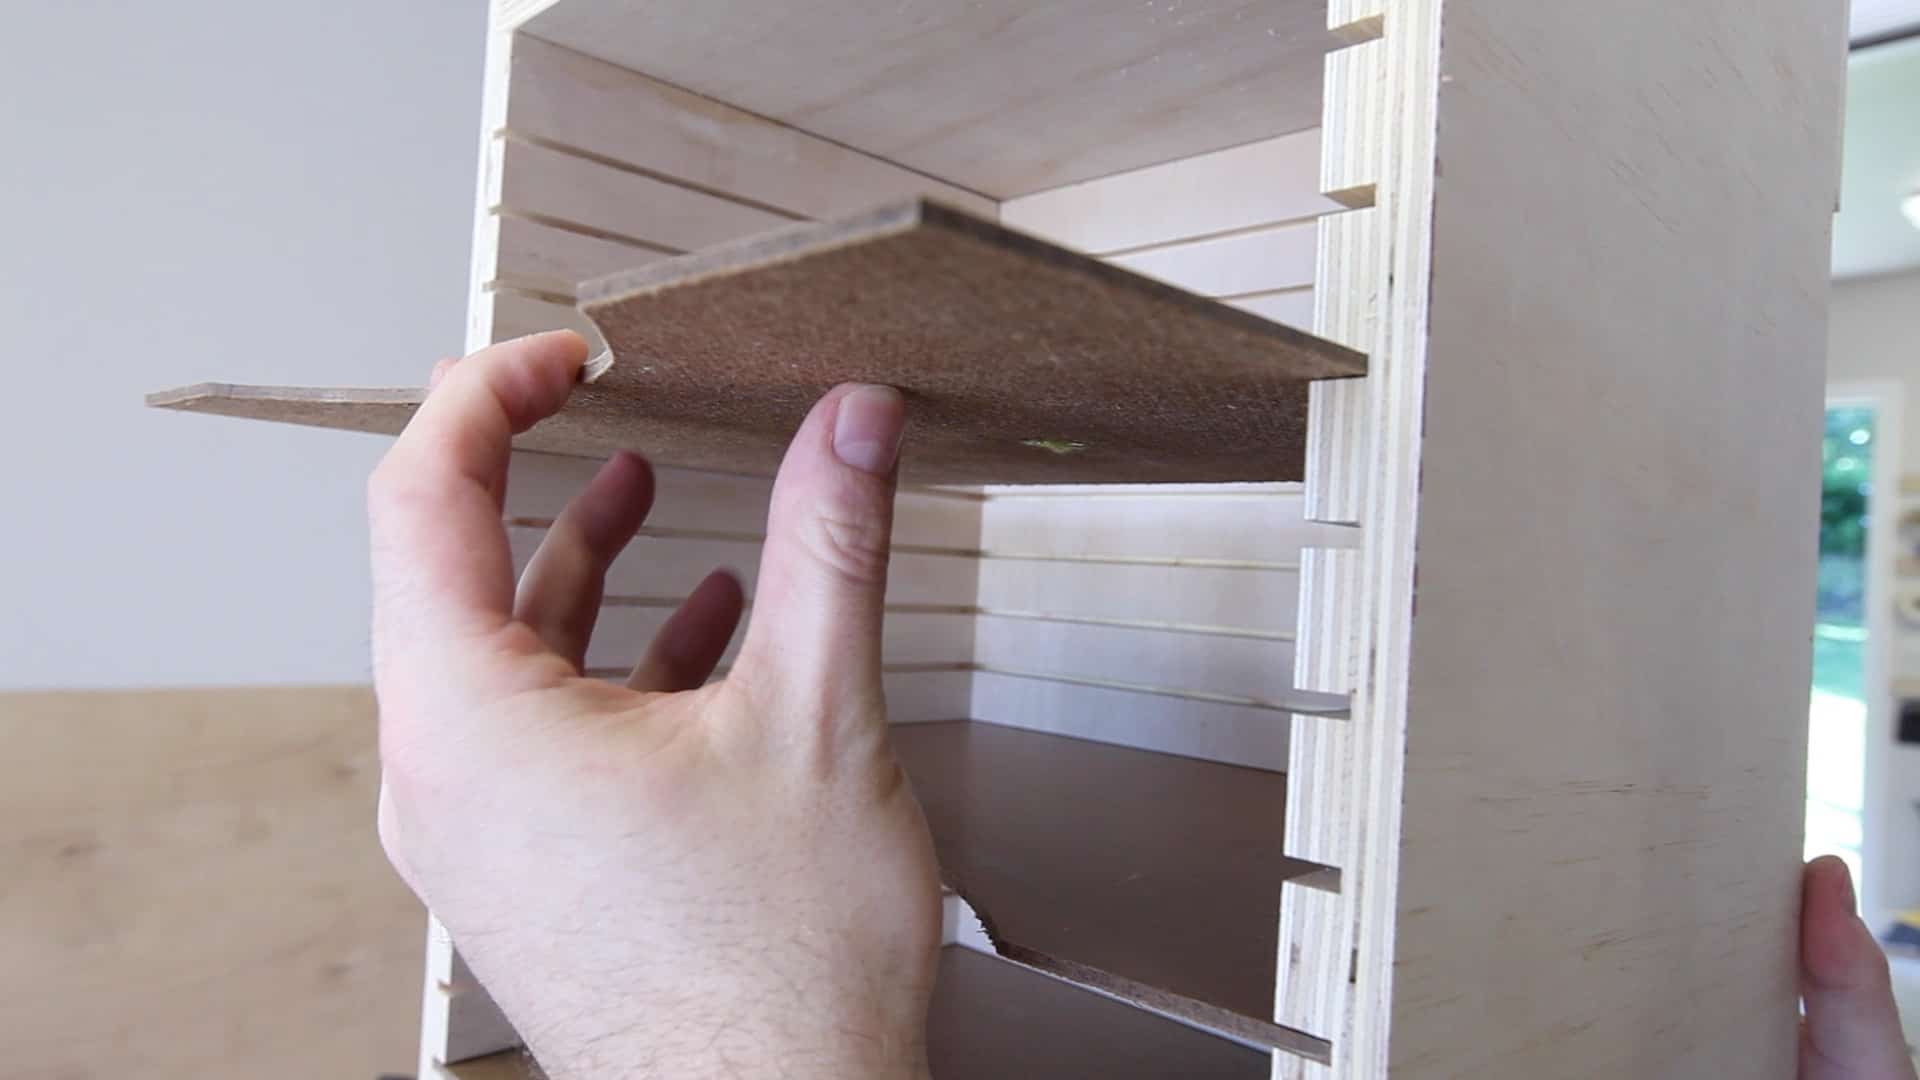 Sander and Sandpaper Storage  Woodworking projects, Woodworking plans,  Woodworking projects plans